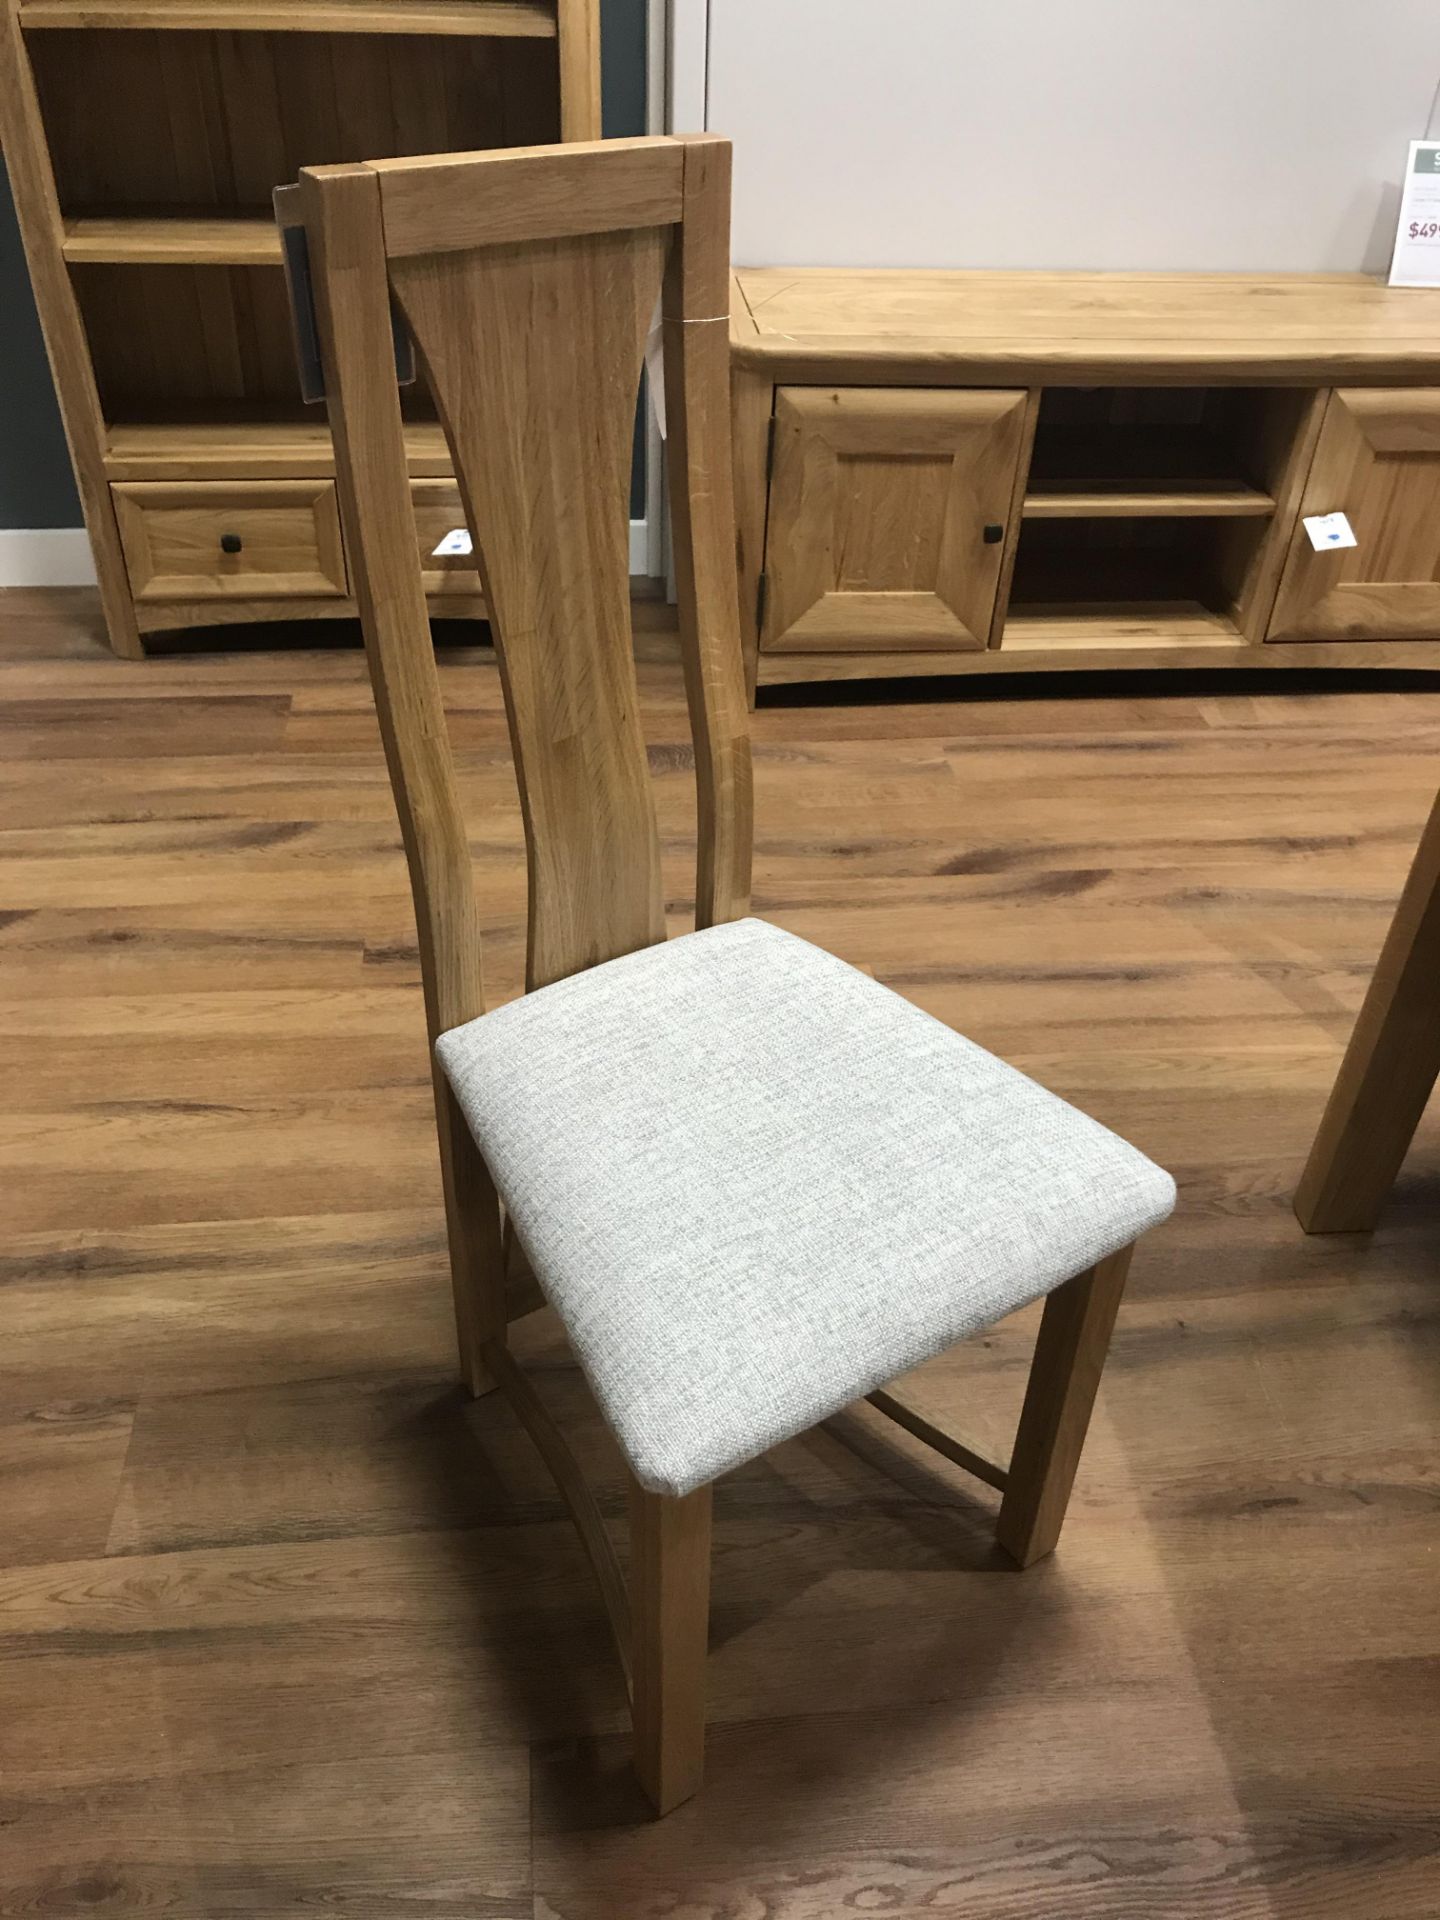 (6) Solid Hardwood Frame Chair